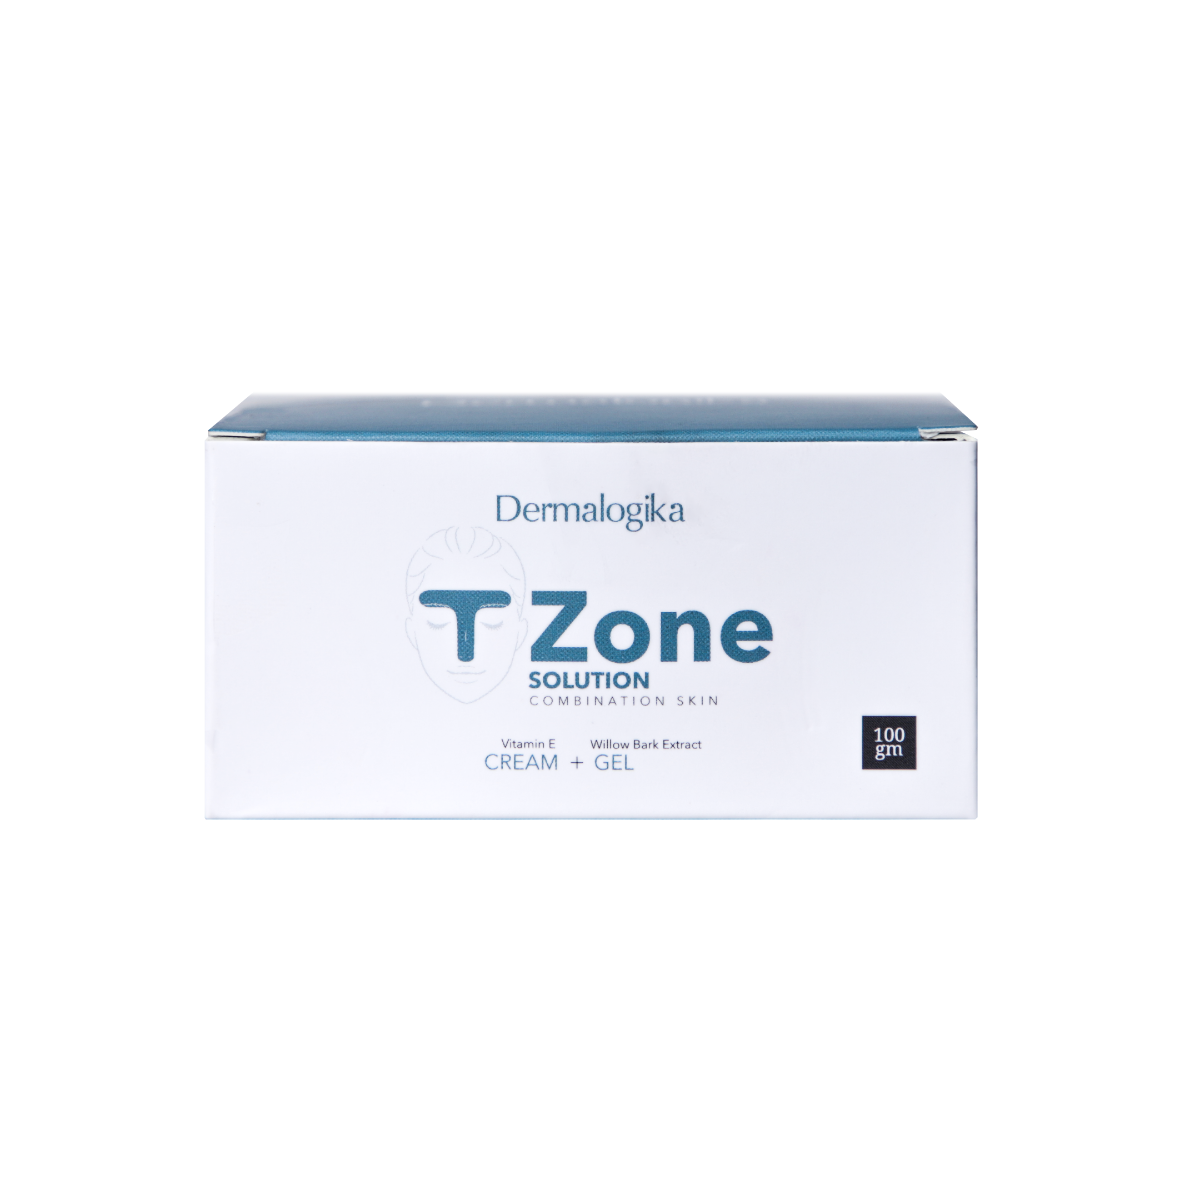 Dermalogika T Zone Solution Gel and Cream (100gm)